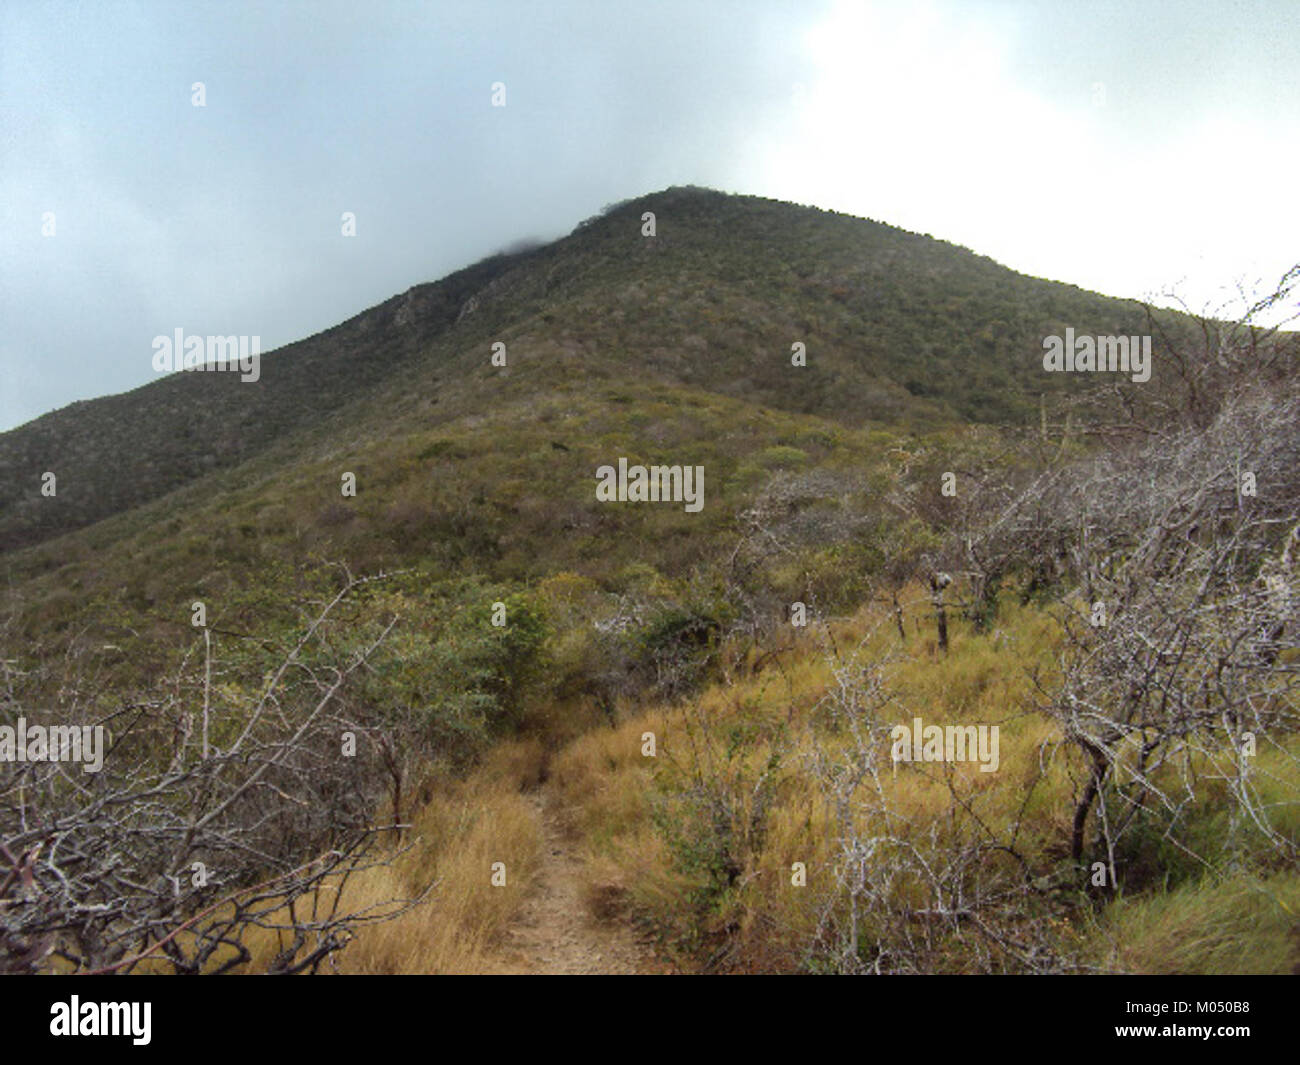 Bosque xerofito en el monumento natural cerro santa ana Stock Photo